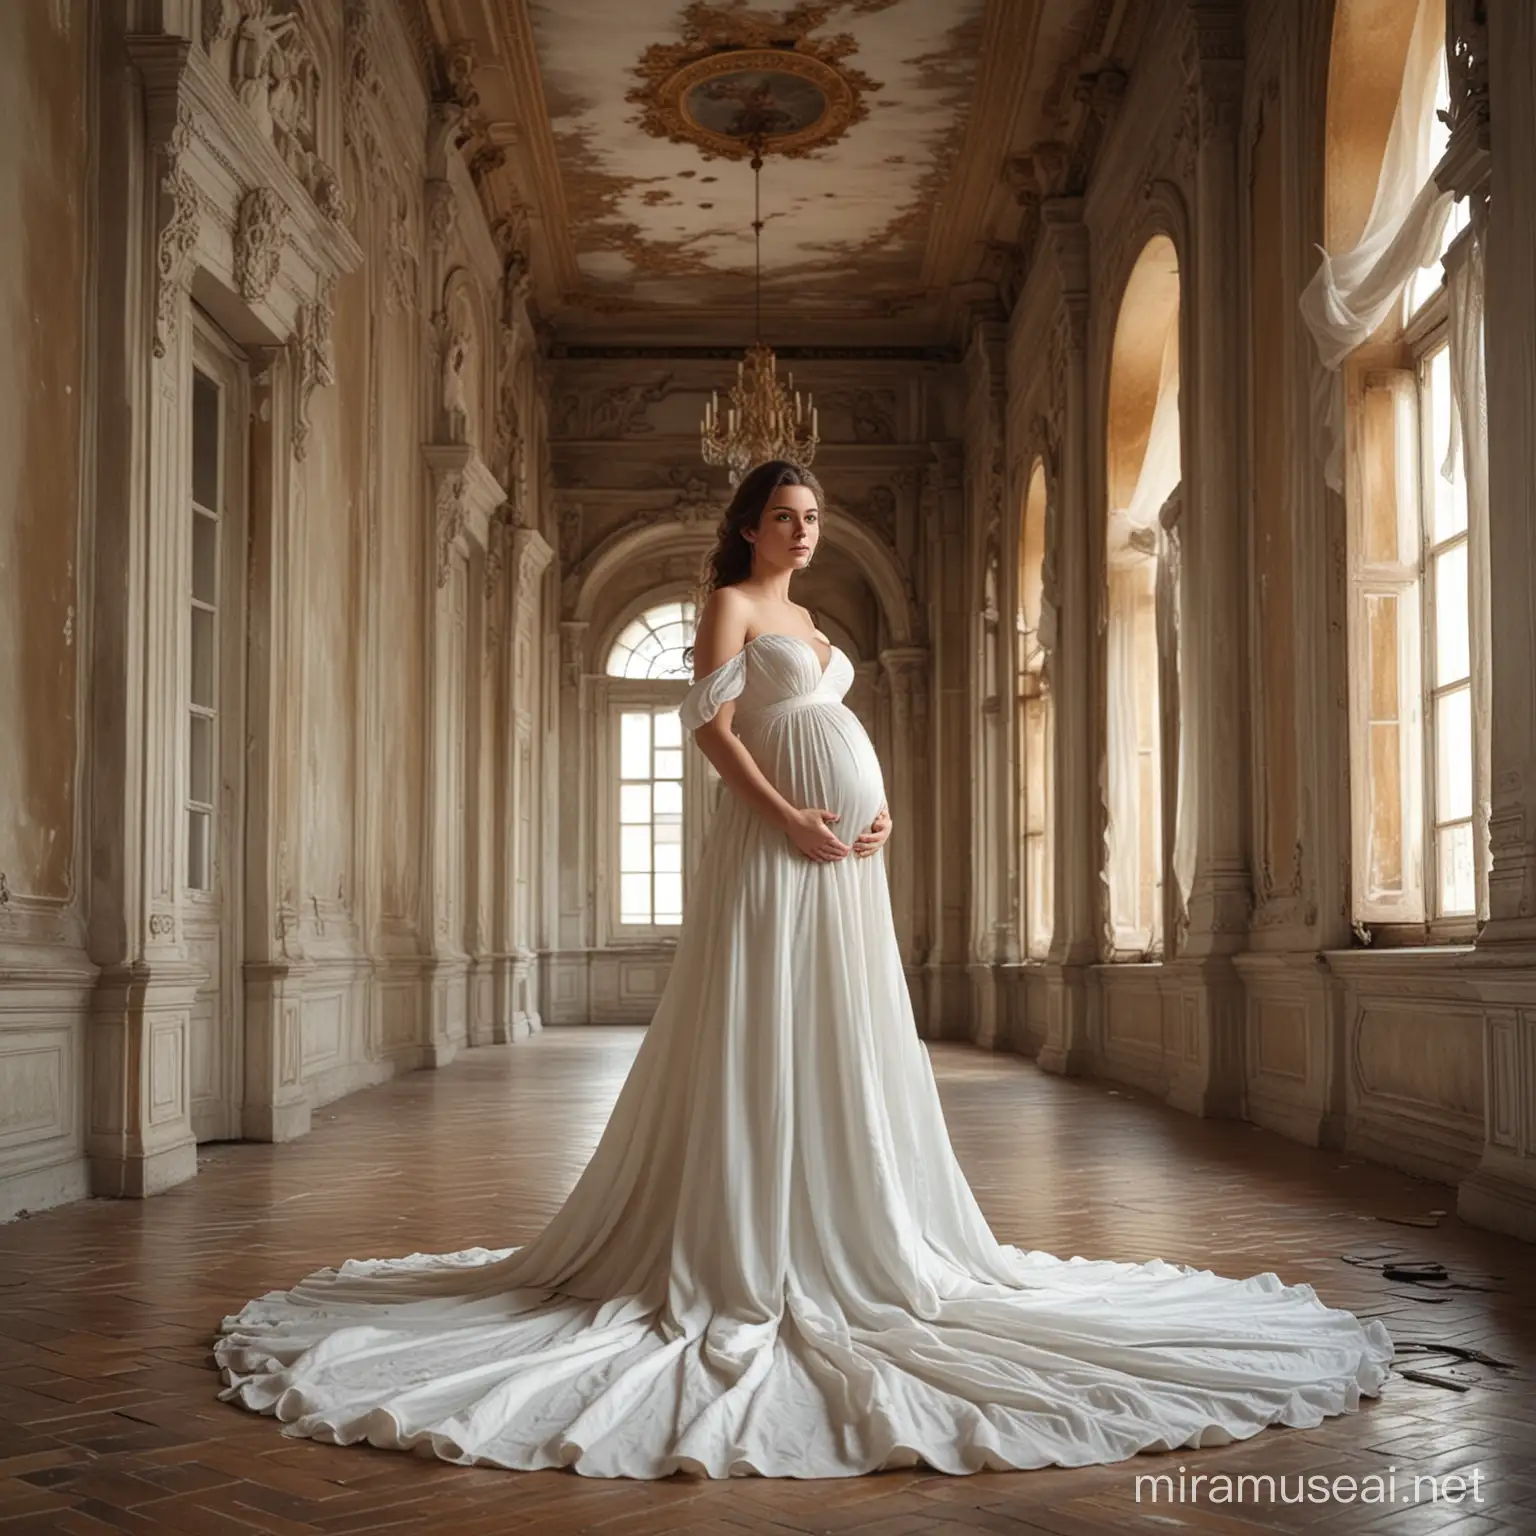 Romantic Era Pregnant Woman Portrait in Baroque Palace Setting